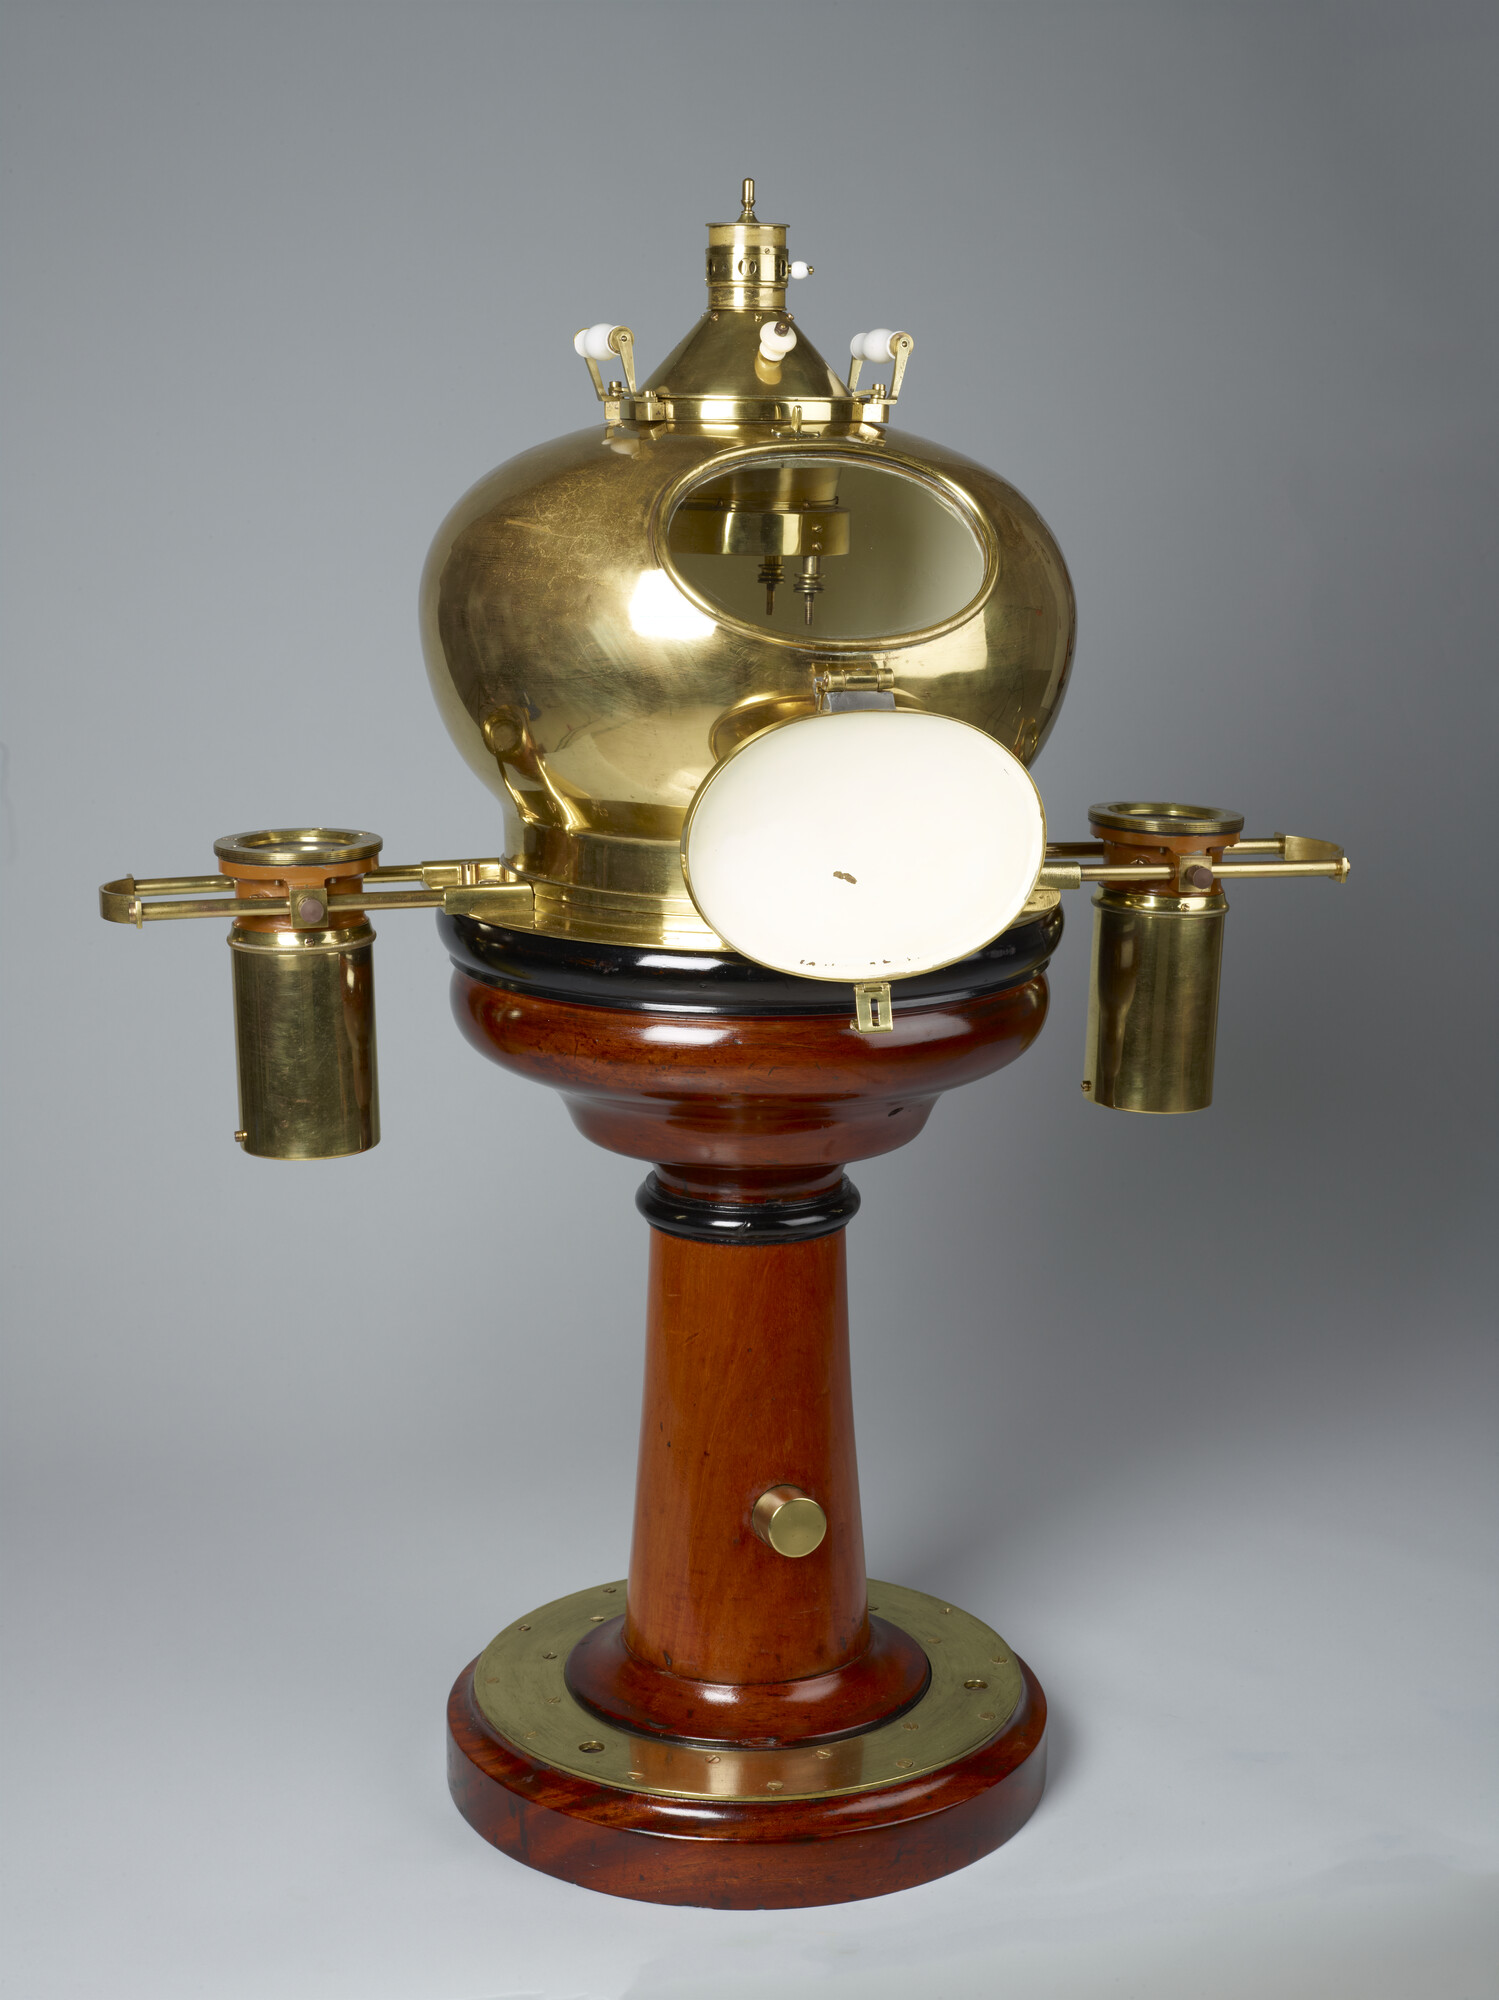 S.0436(01); Stuurkompas door Firma W. Boosman, Amsterdam, circa 1897; stuurkompas